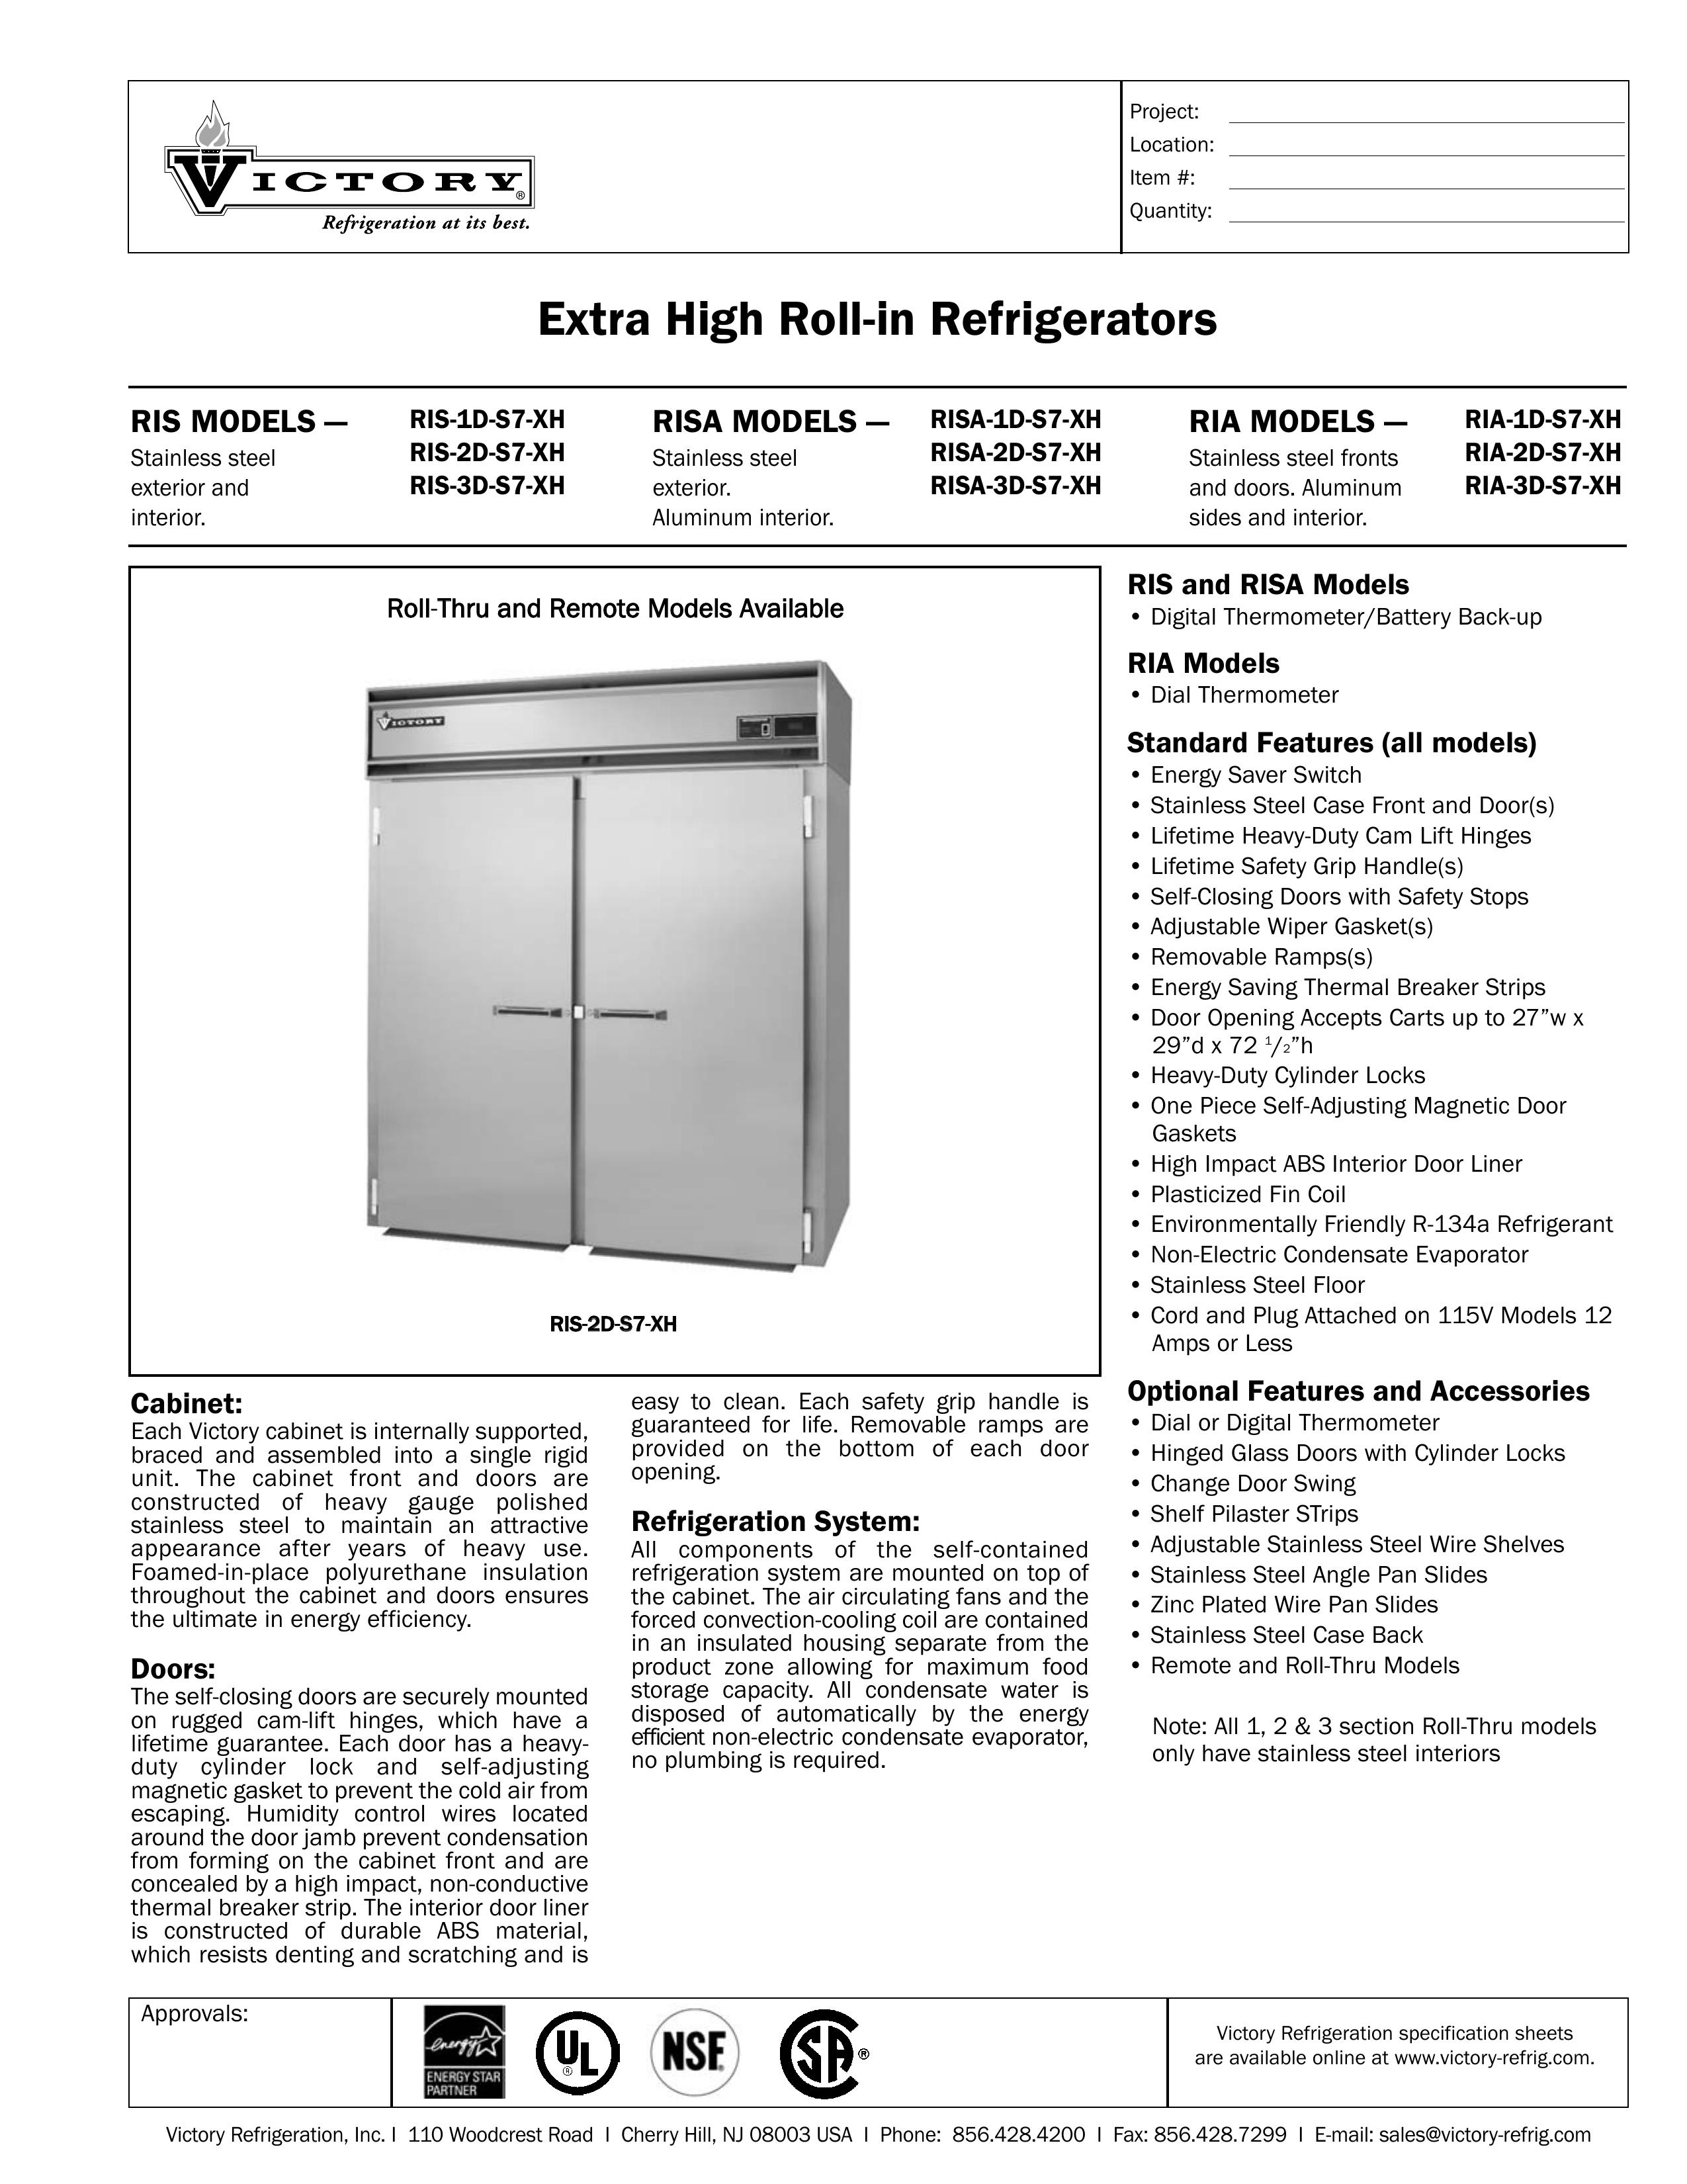 Victory Refrigeration RIS-2D-S7-XH Refrigerator User Manual